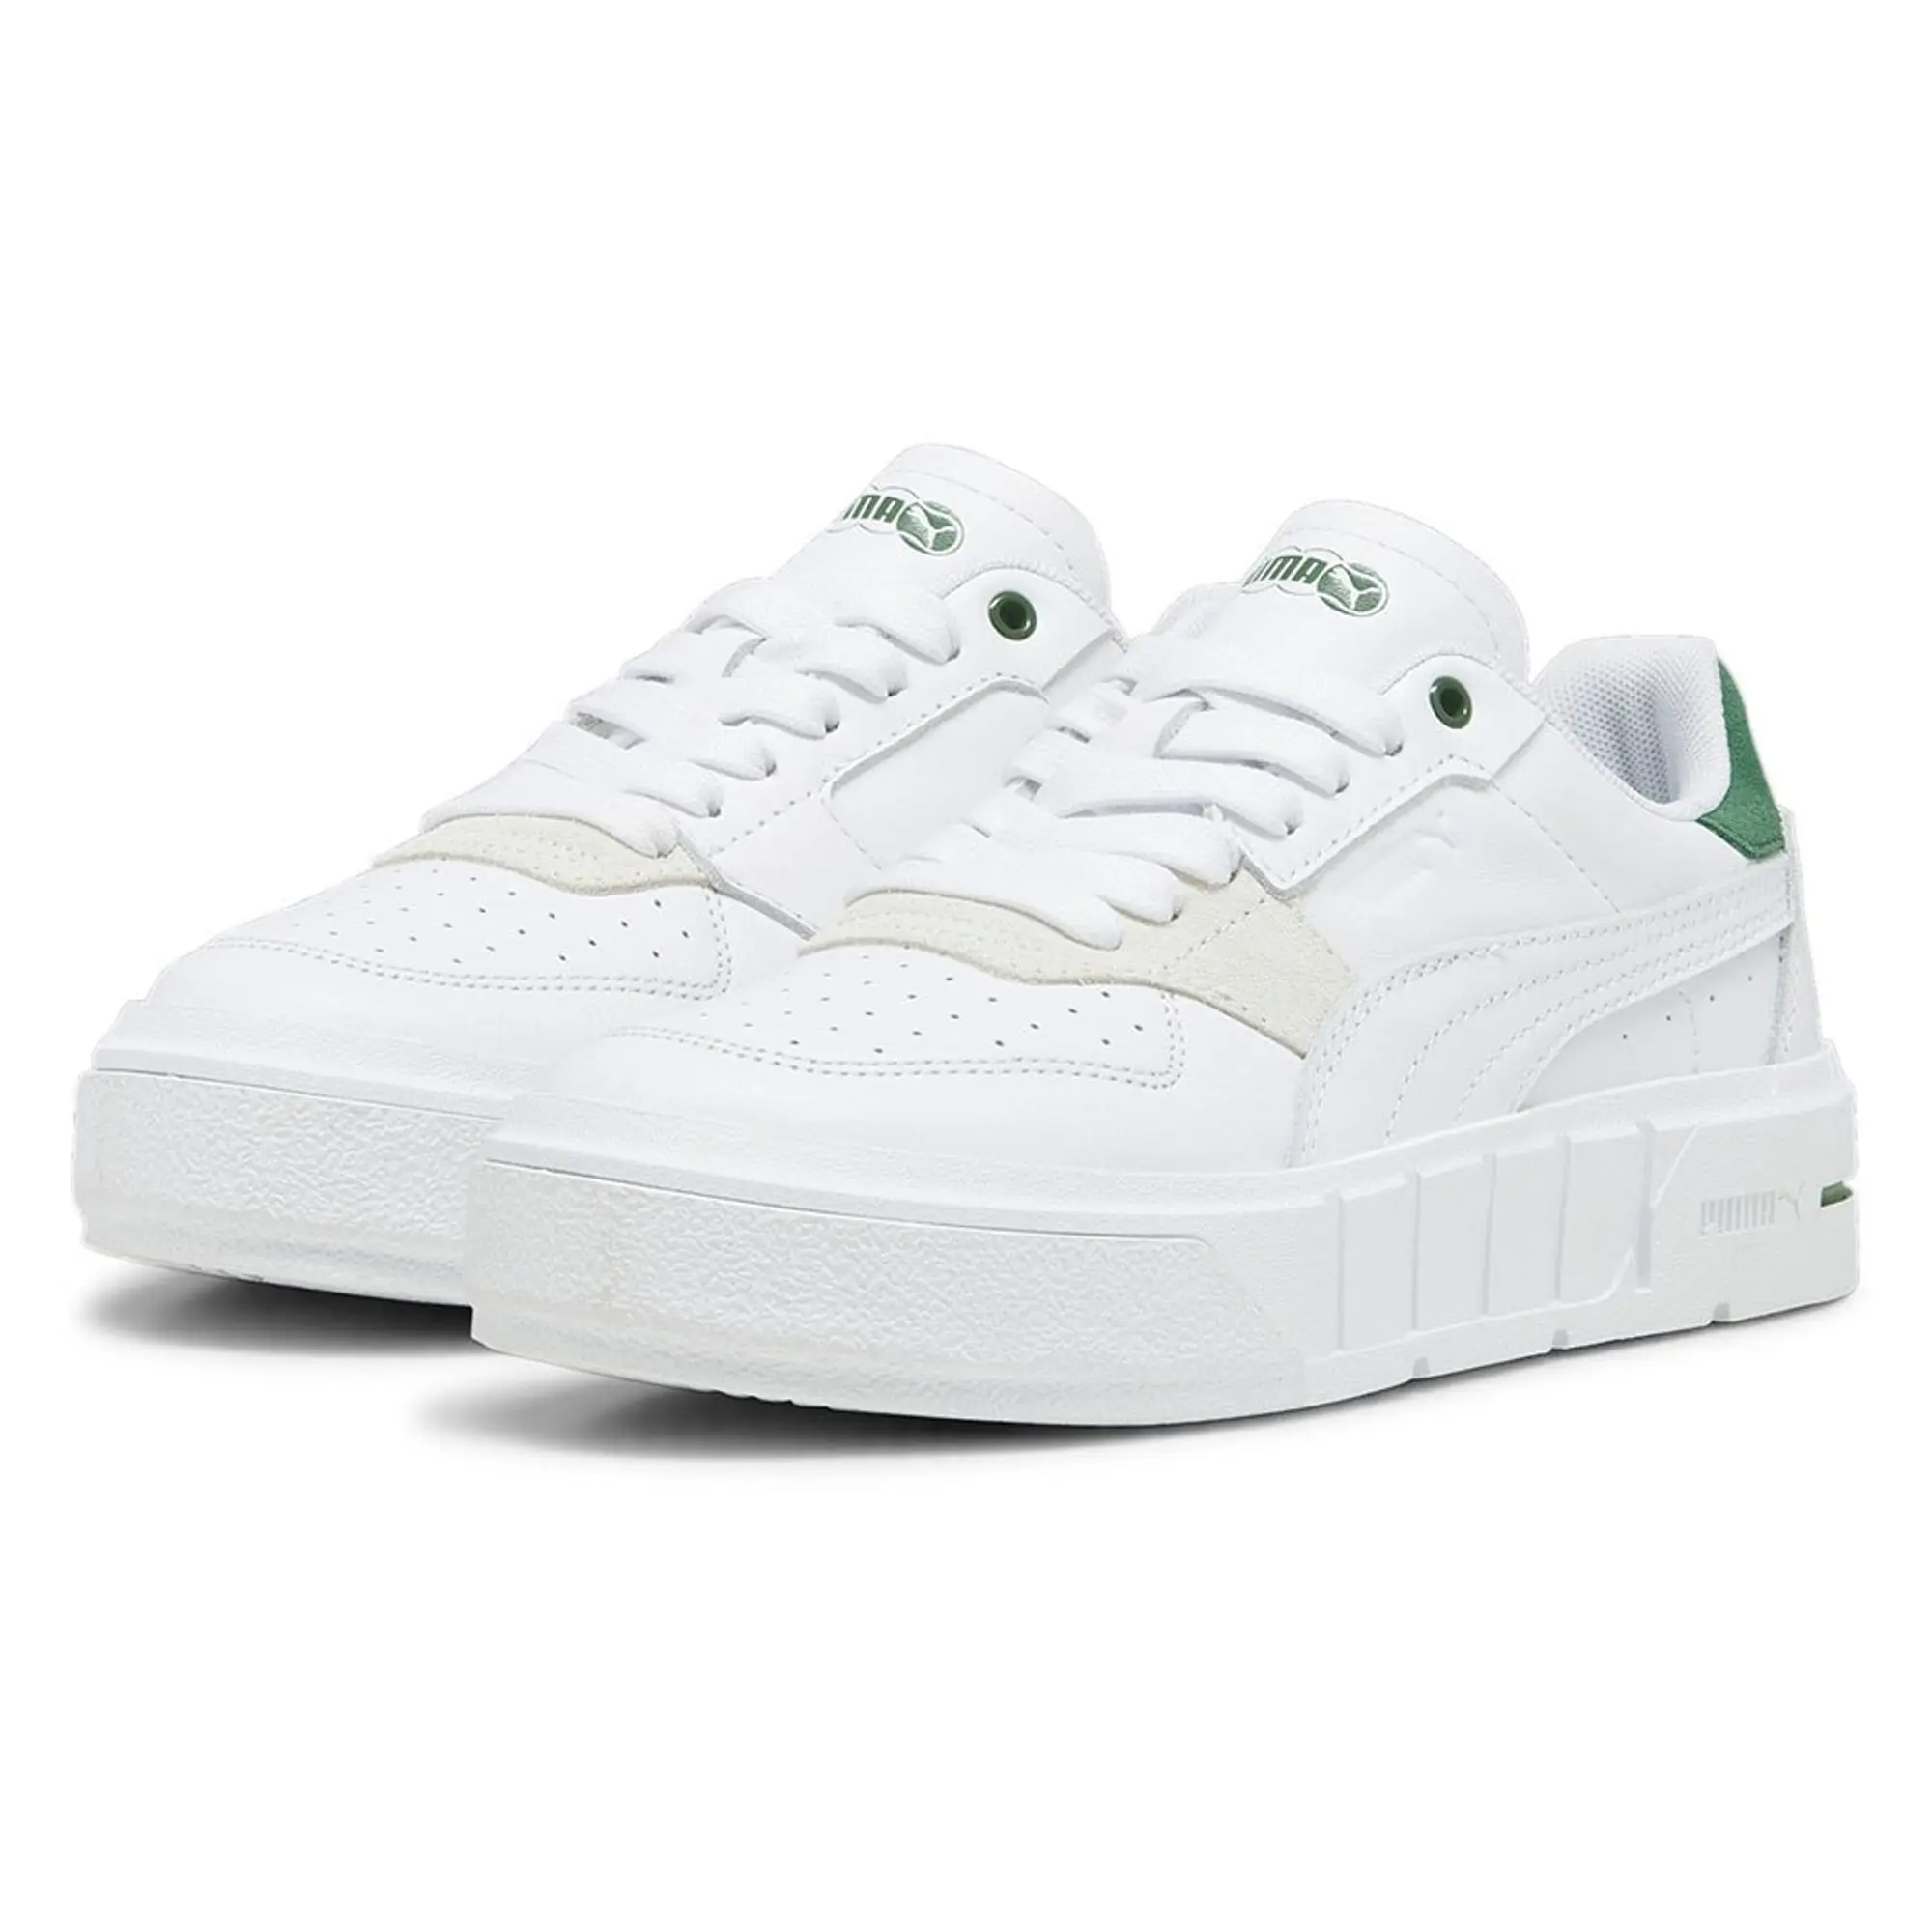 PUMA Cali Court Match Sneakers Women, White/Archive Green